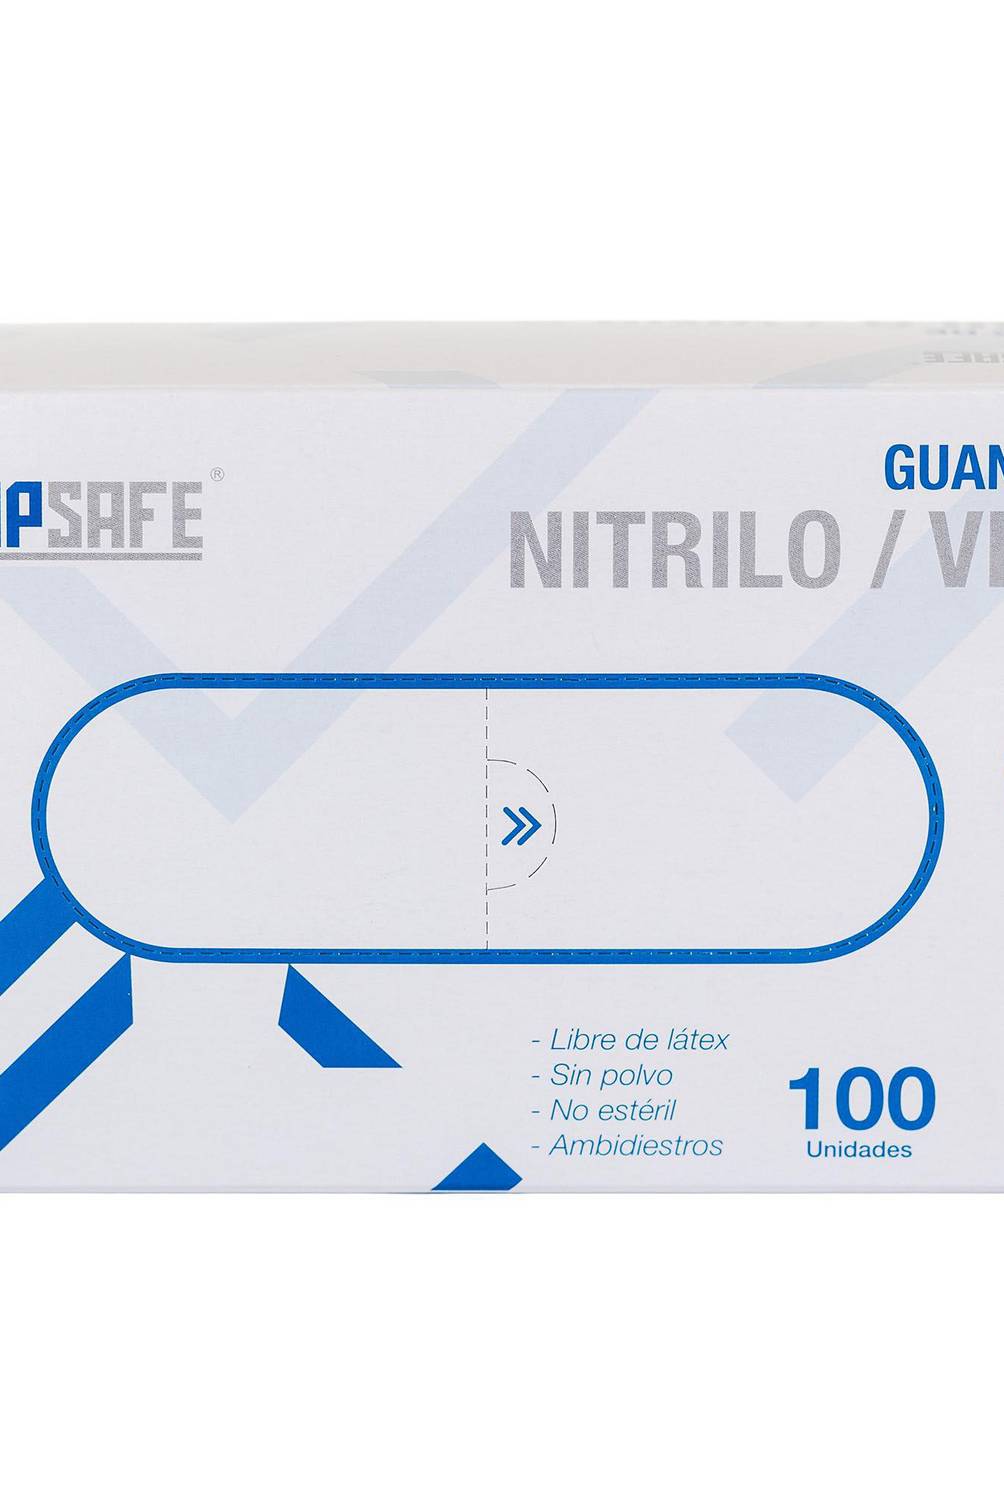 TOPSAFE - Guante desechable de nitrilo-vinilo talla XL caja de 100 unidades